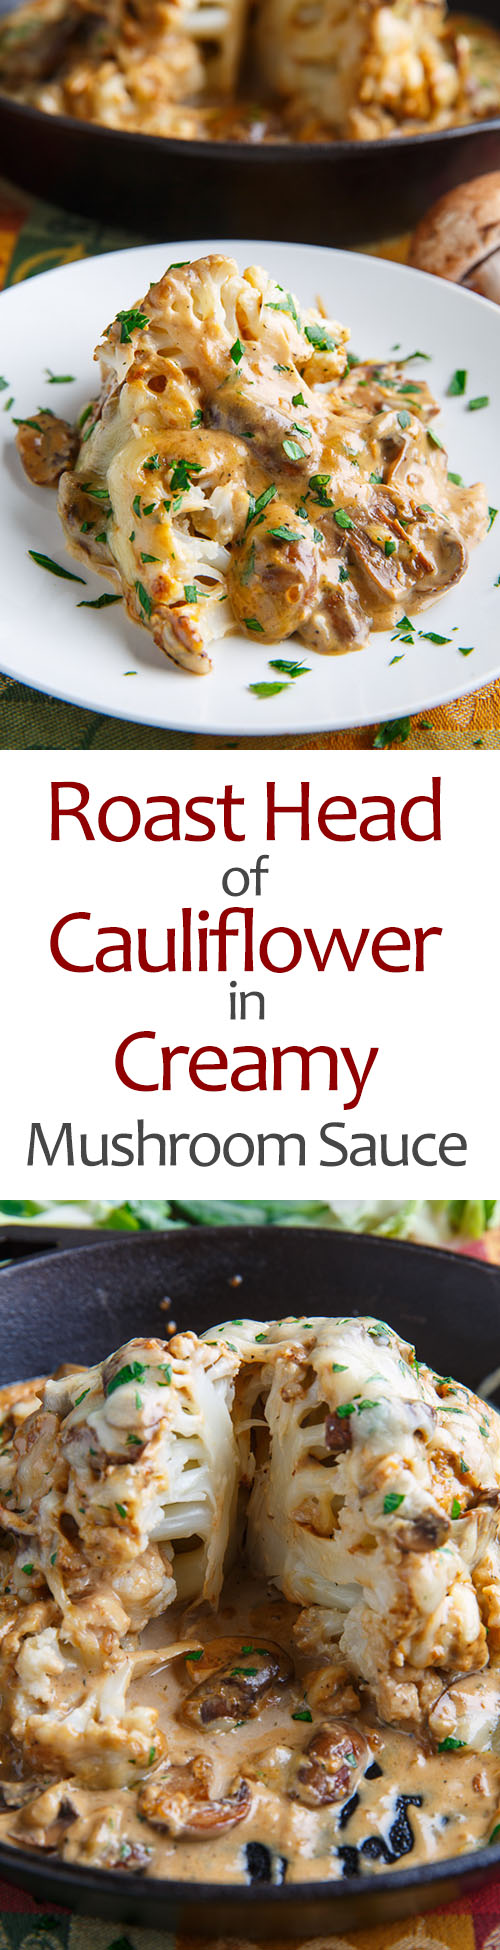 Roast Head of Cauliflower in Creamy Mushroom Sauce